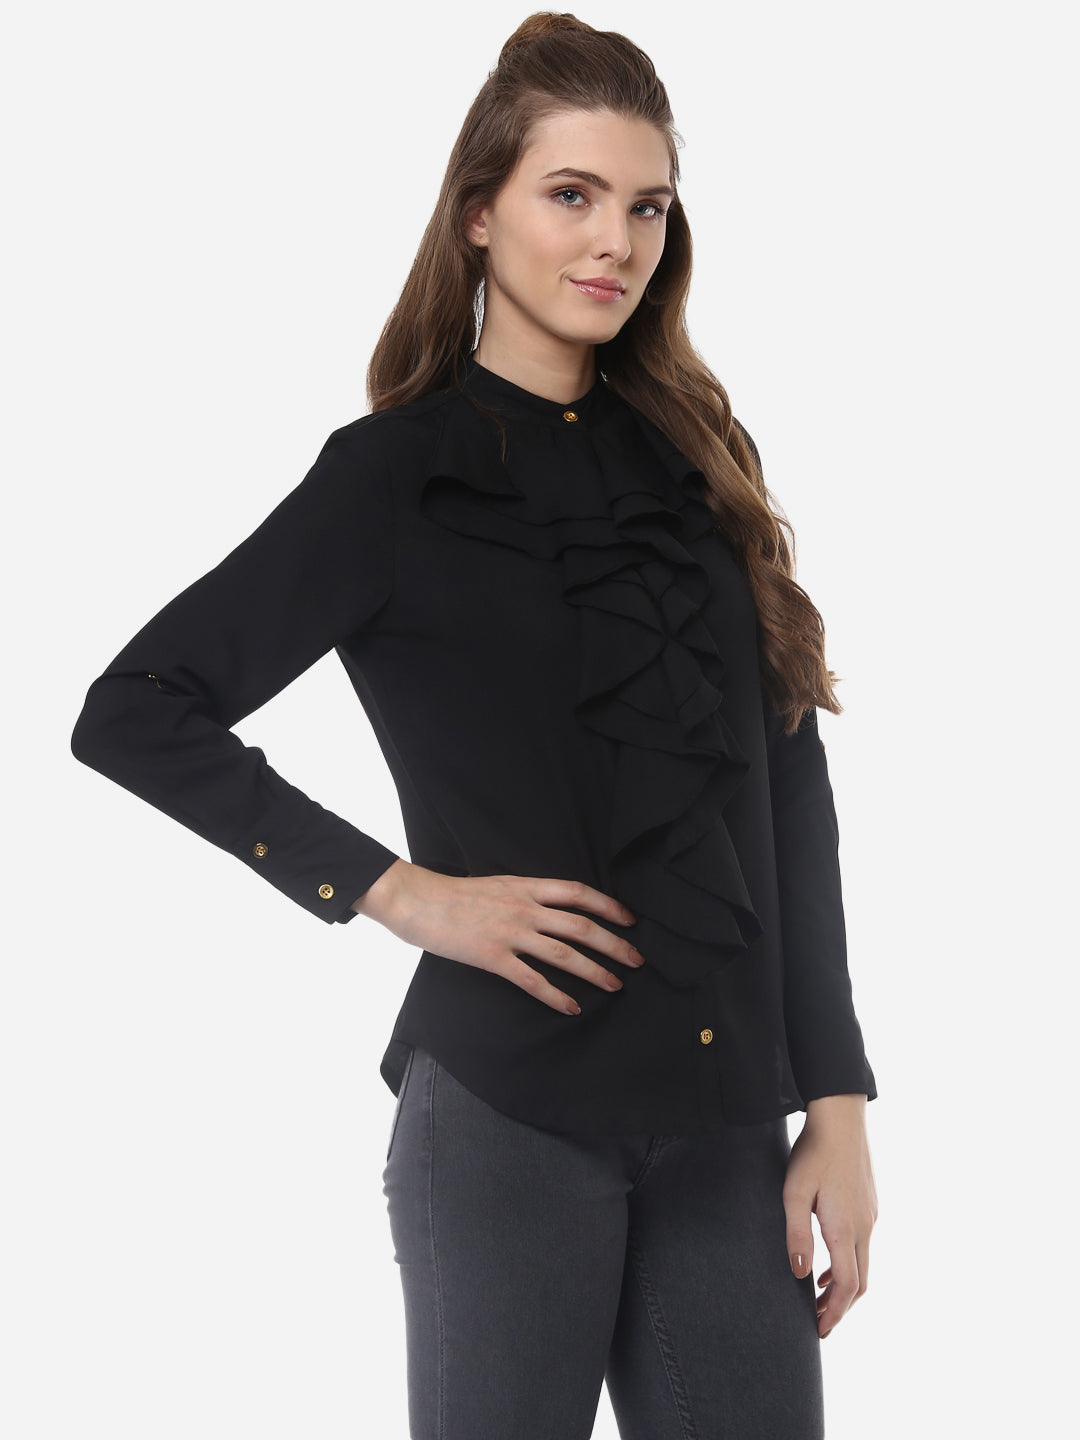 Women's Black Polyester Ruffle Top